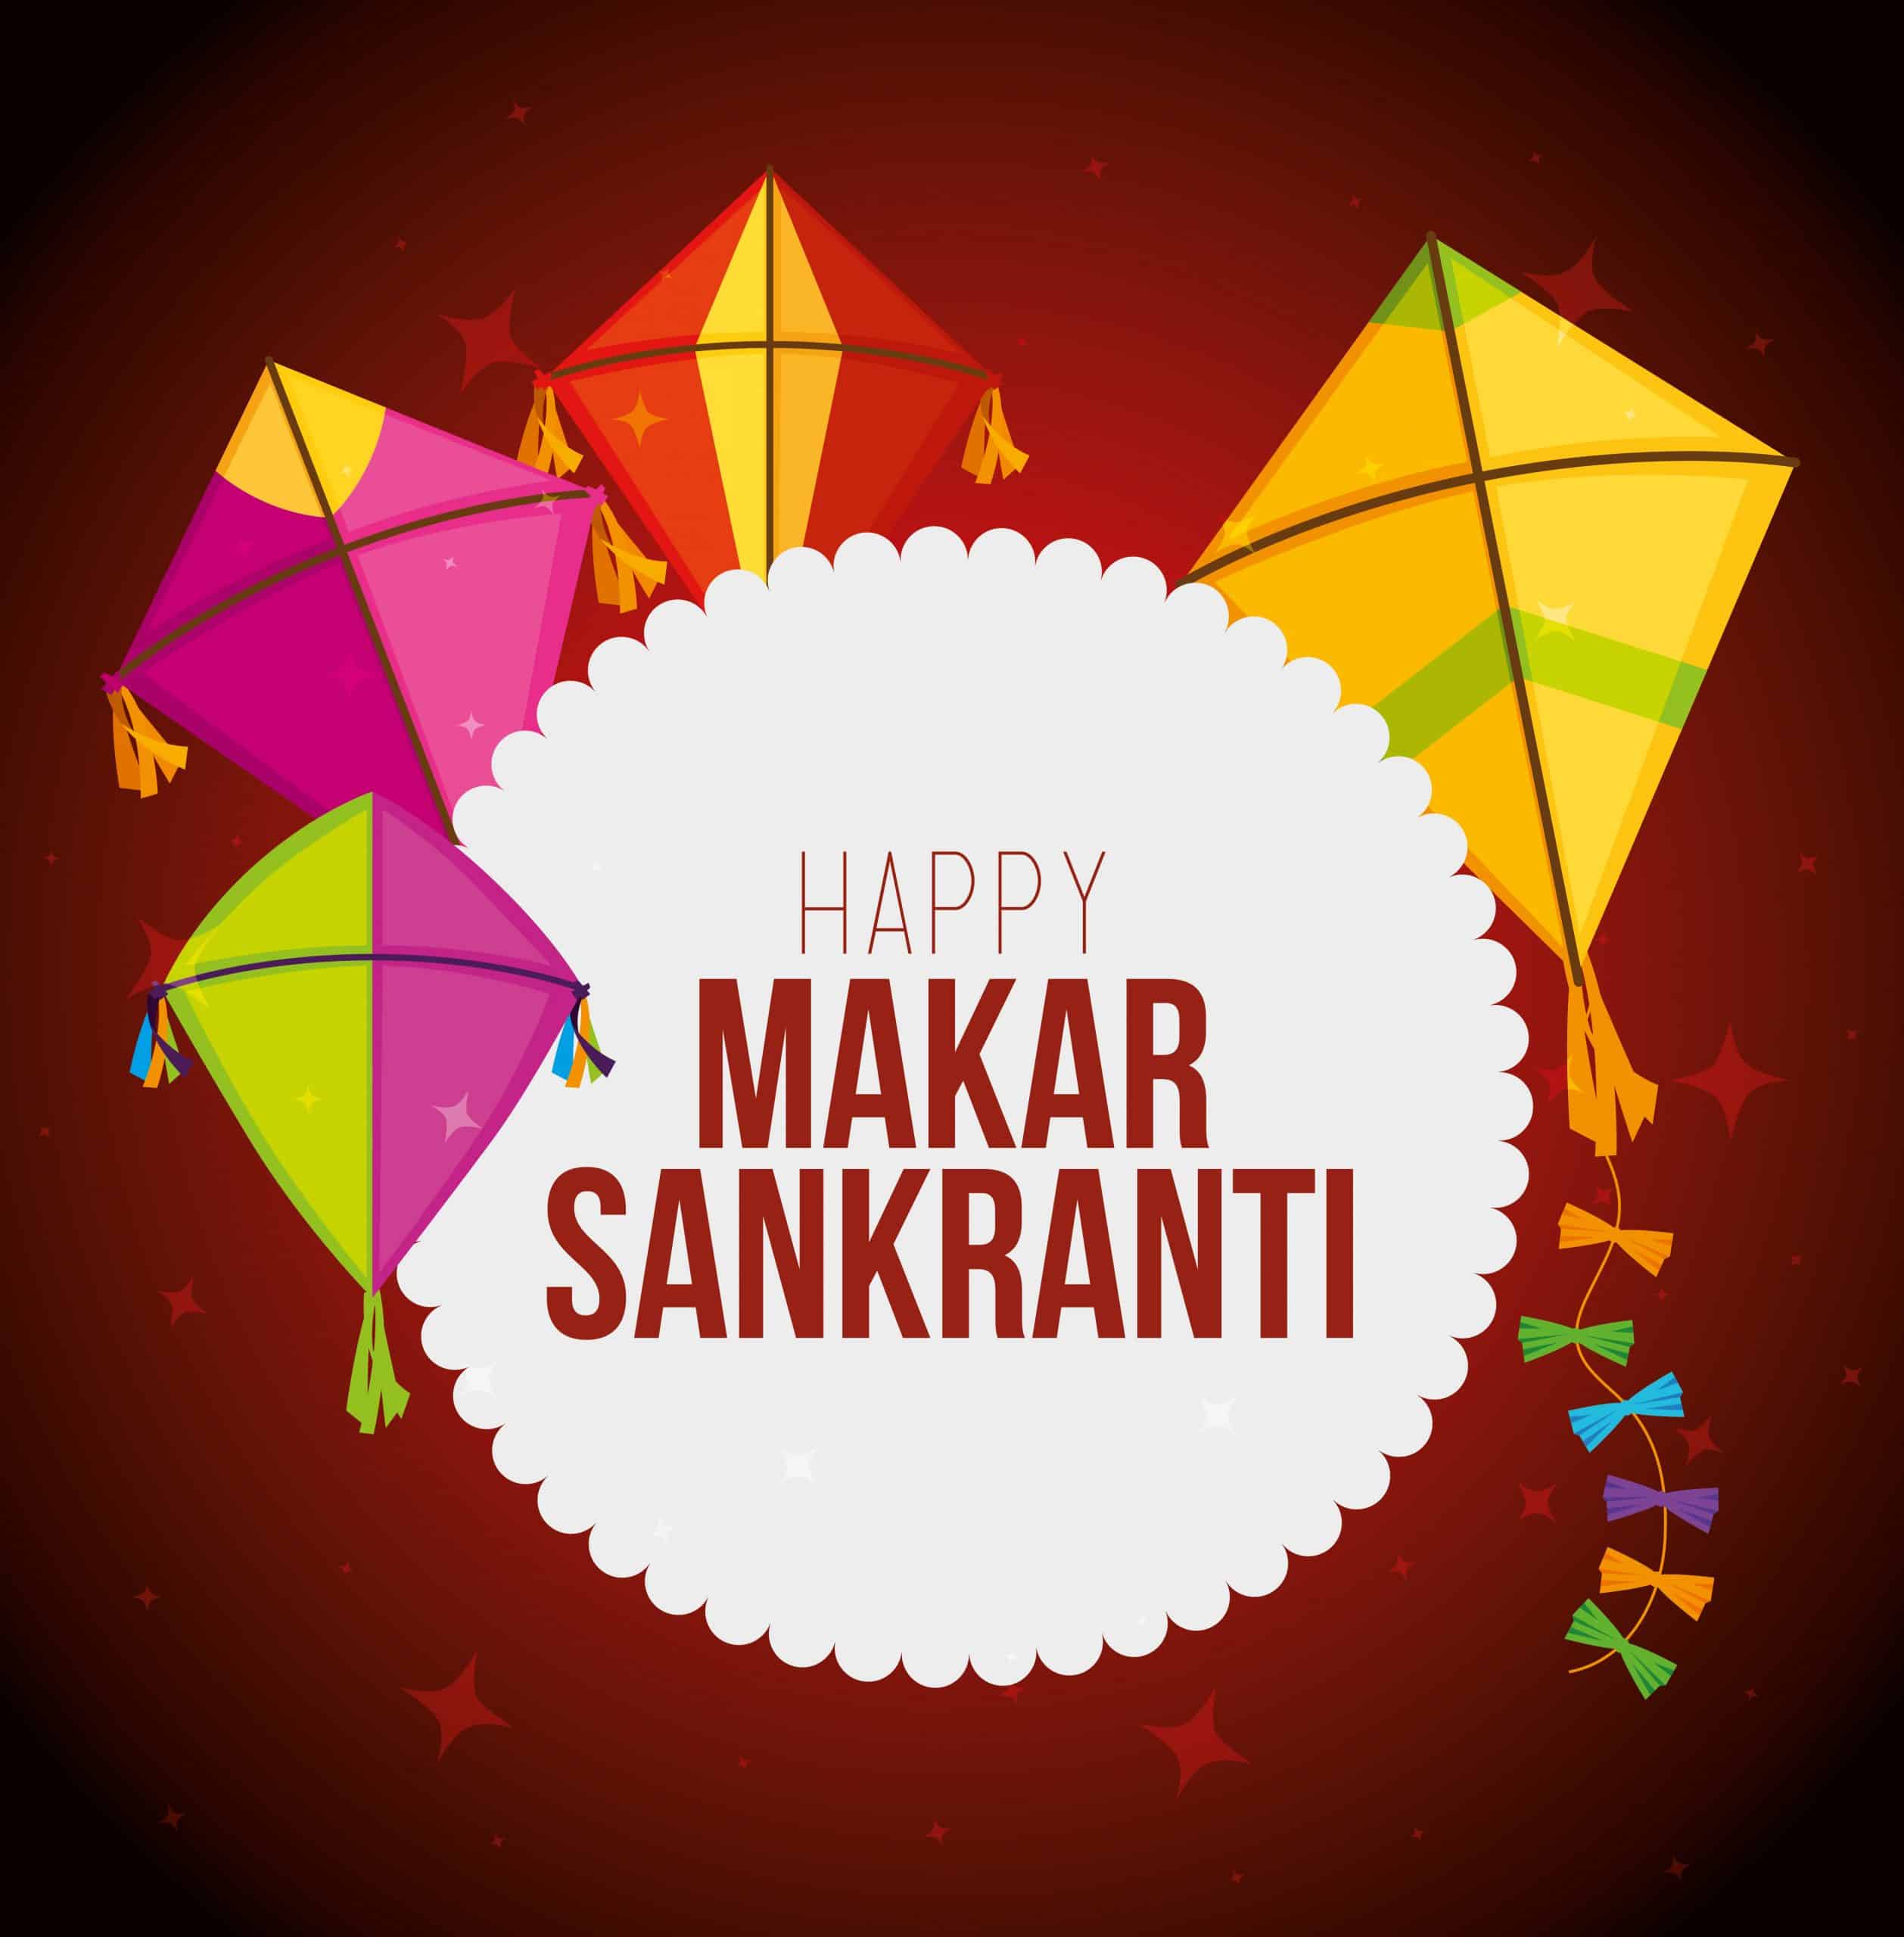 Makar Sankranti Images